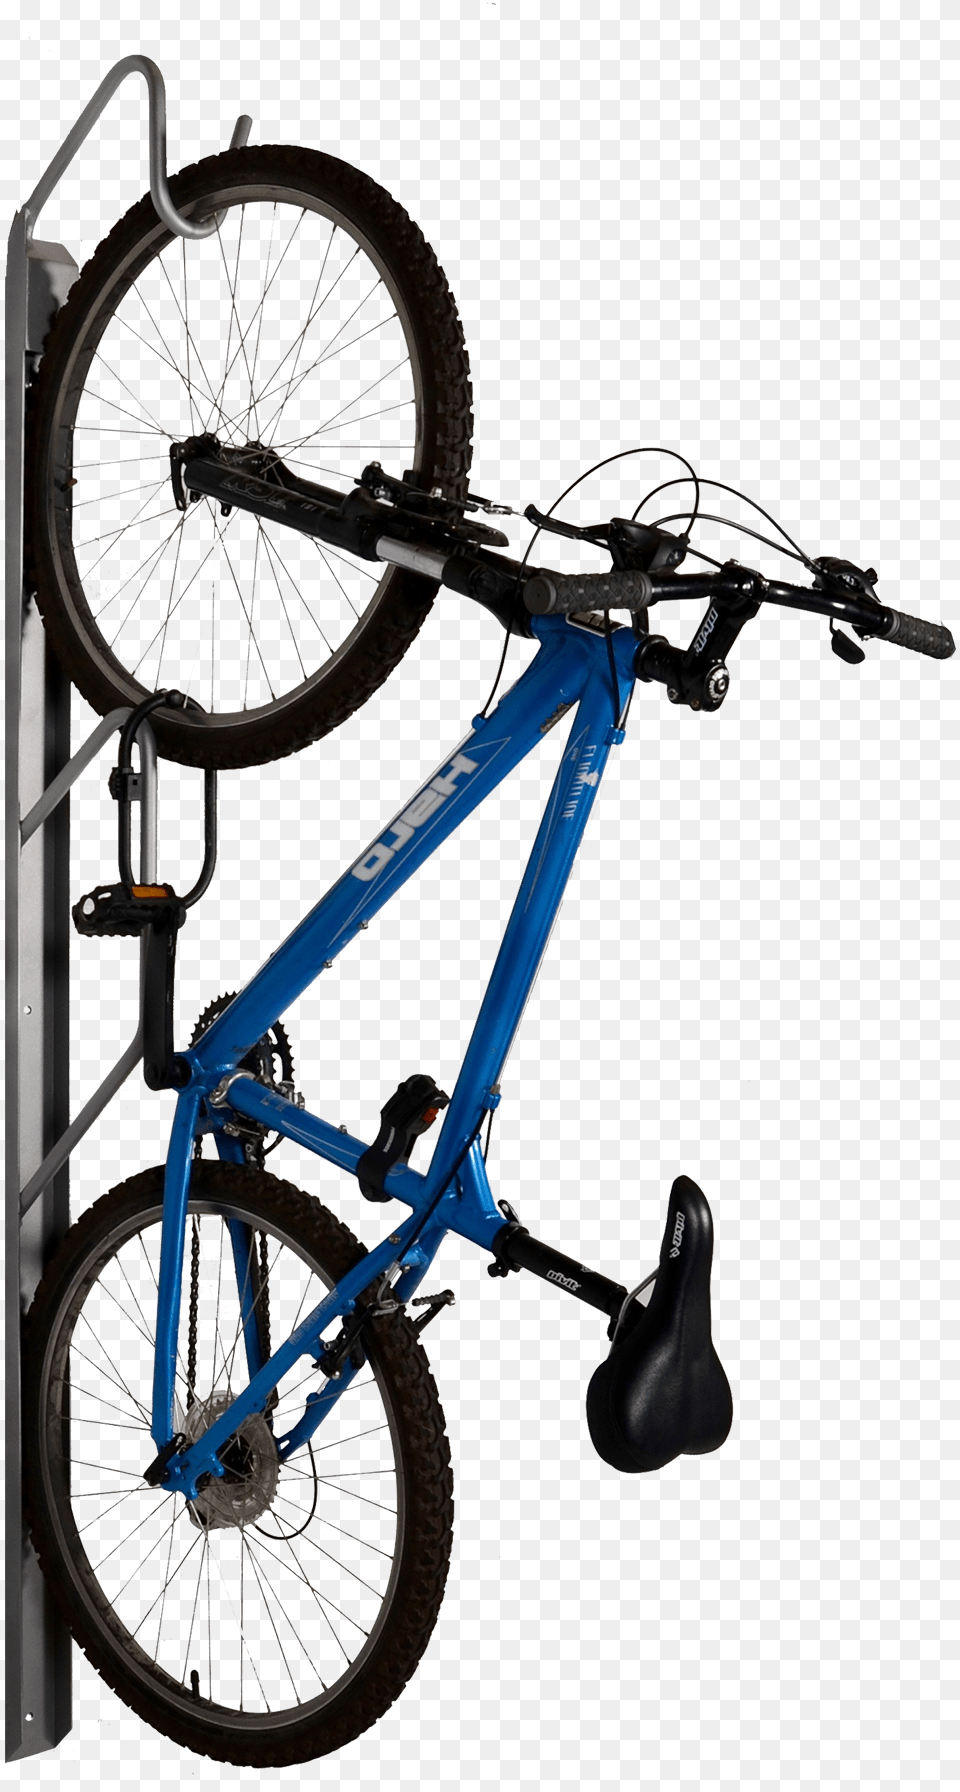 Urban Space Wall Mount Bike Rack Bike Rack Wall, Bicycle, Machine, Transportation, Vehicle Png Image